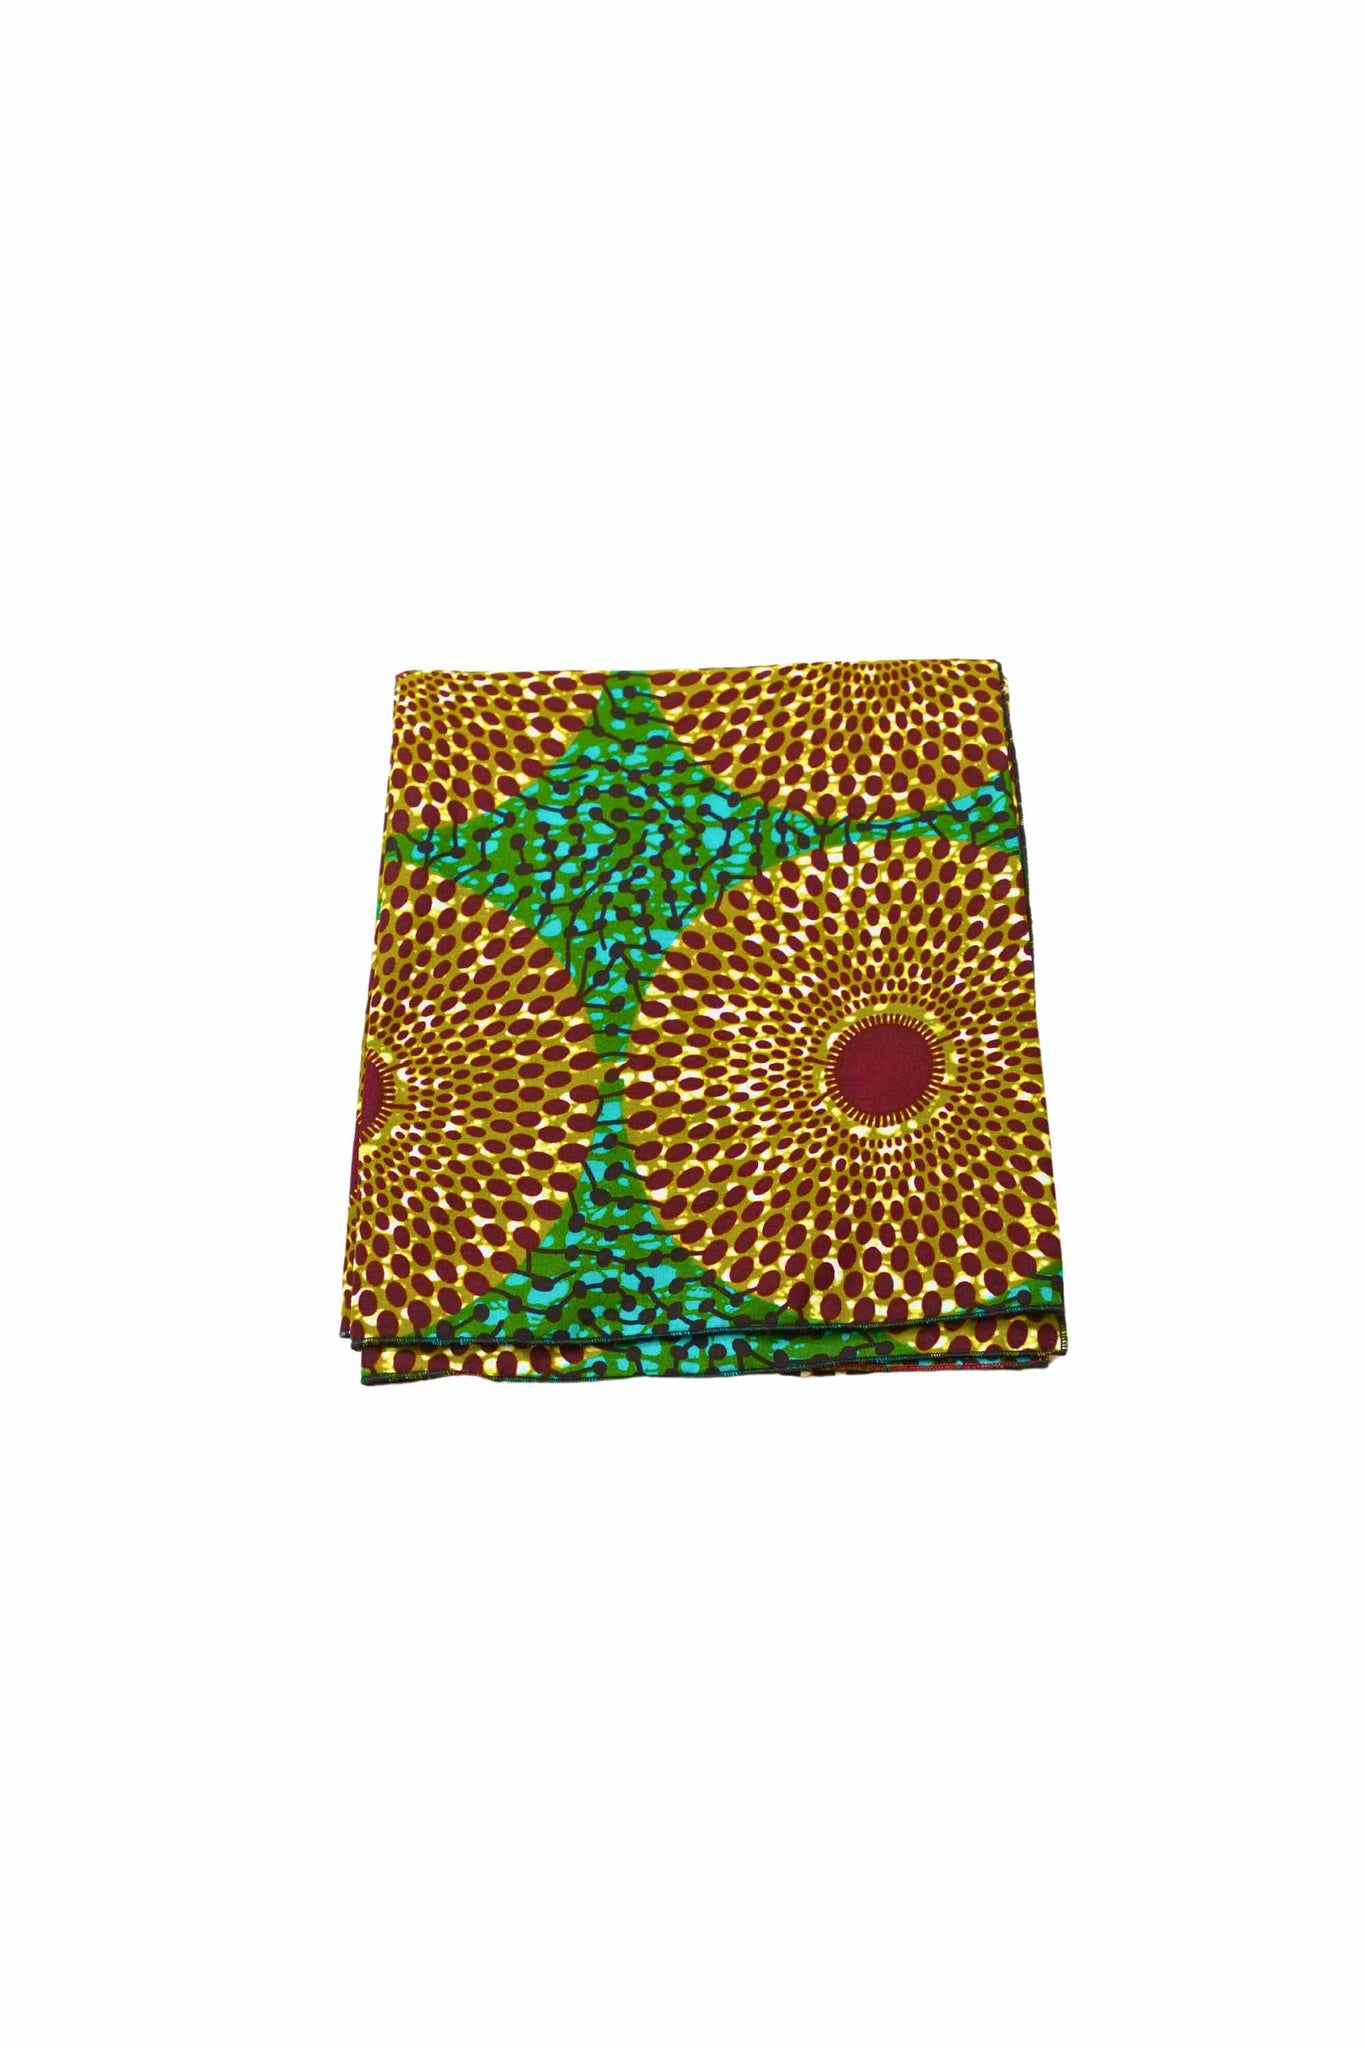 Iza Headwrap - Green and Brown African Ankara Wax Cotton Print